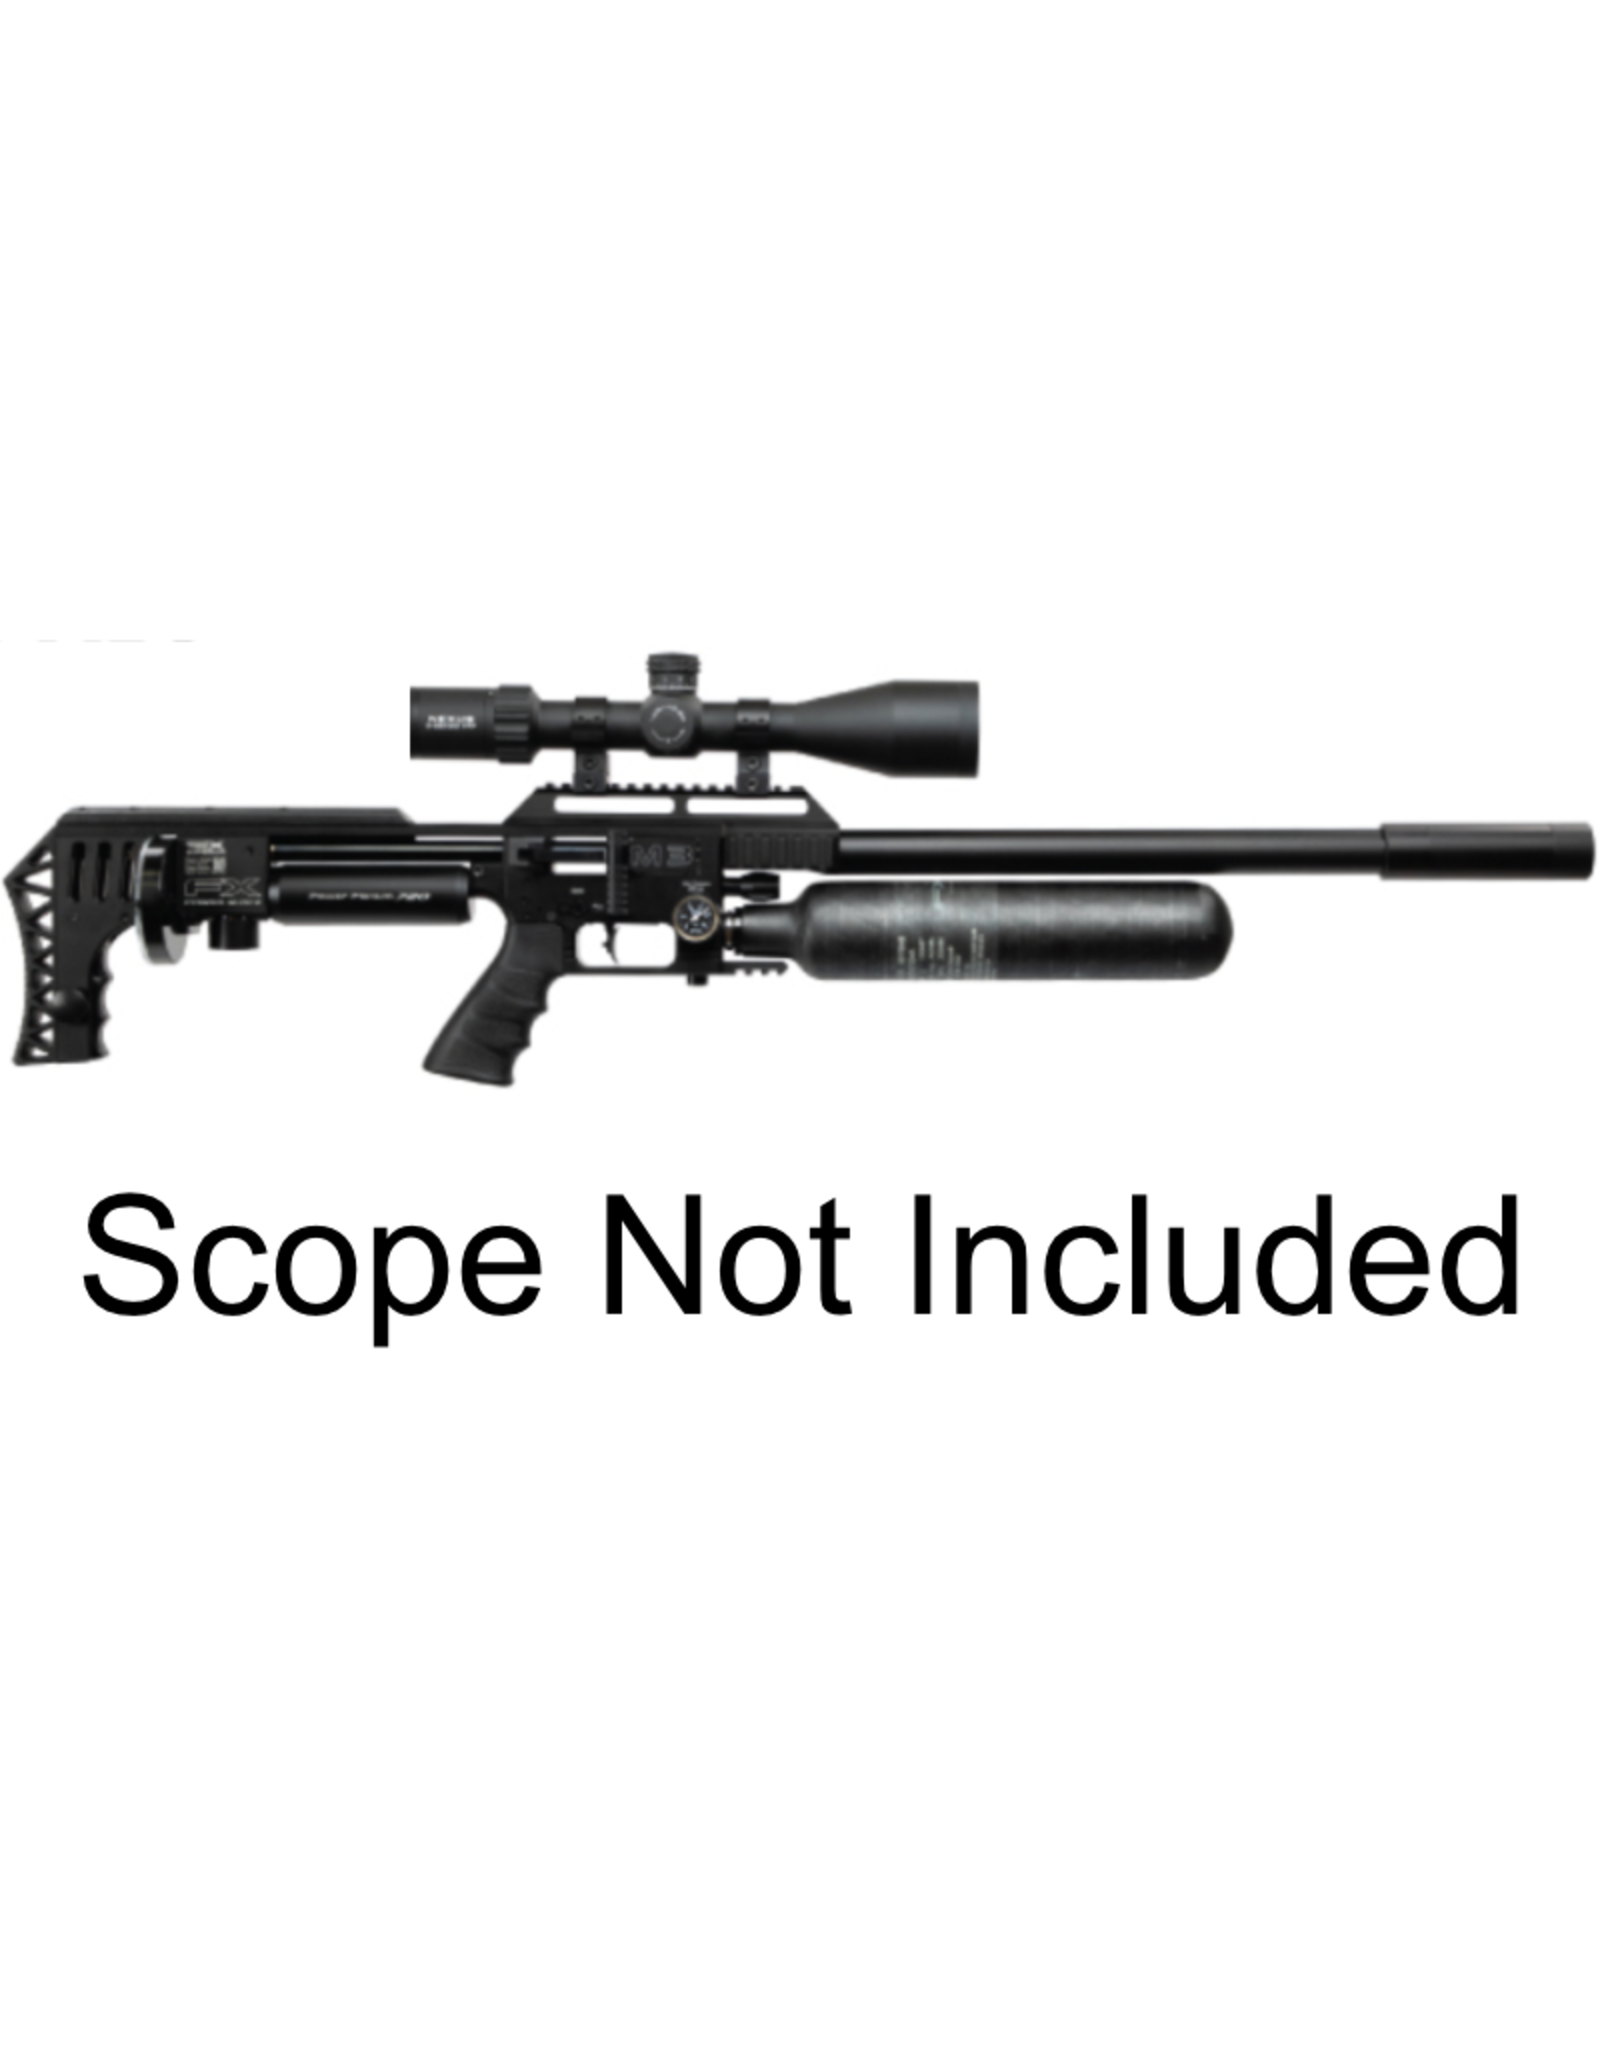 FX Airguns FX Impact M3, Black - 700mm  - .22 caliber - POWER BLOCK w/ DONNYFL MOD